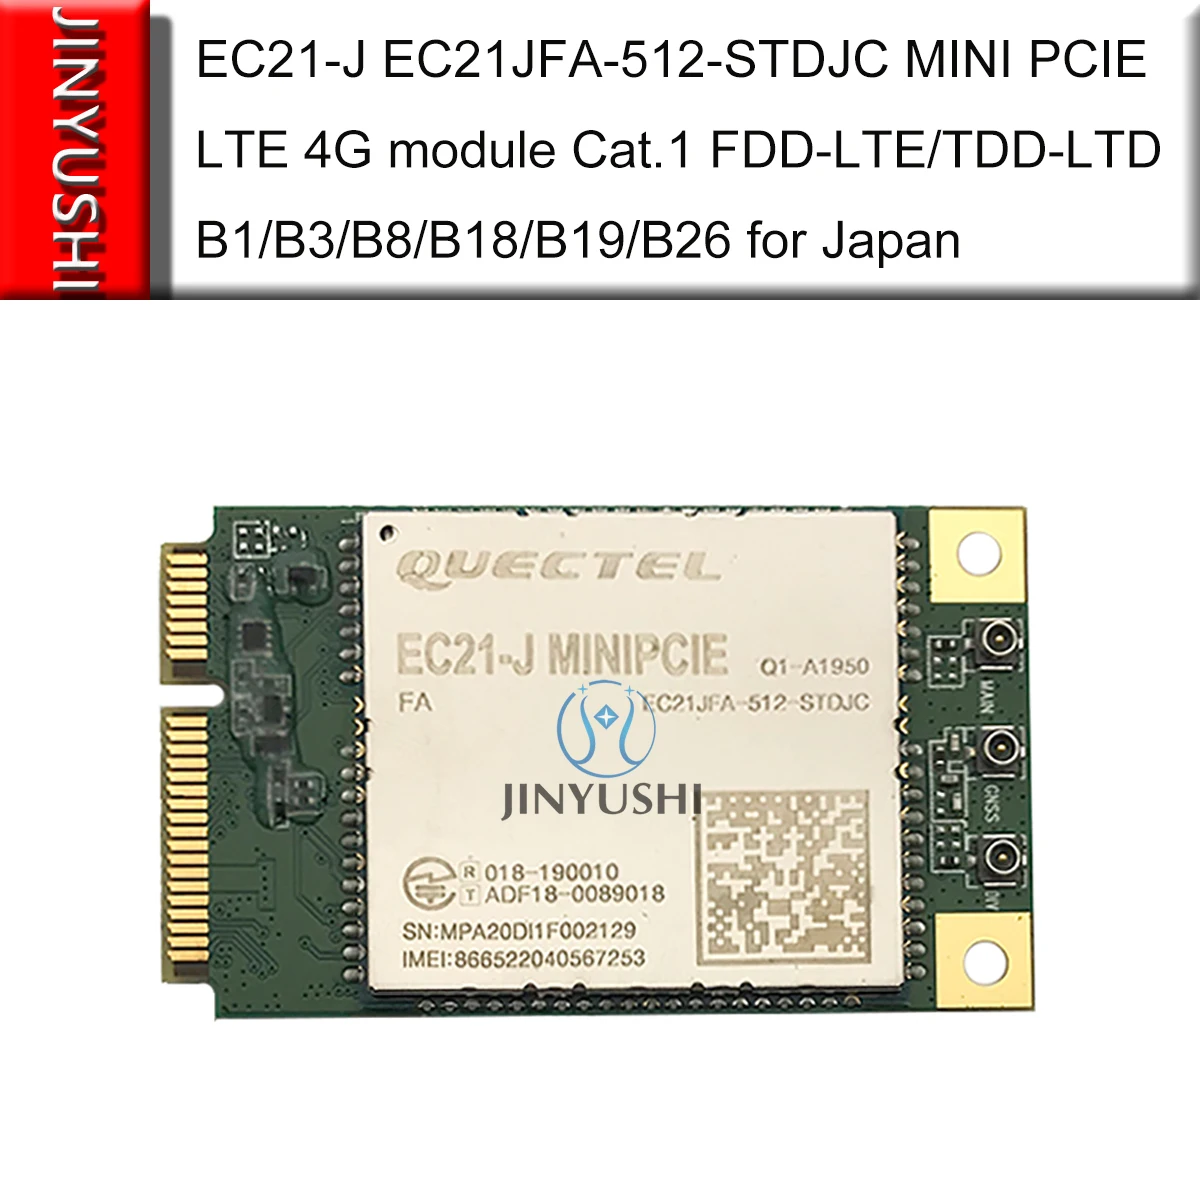 

Quectel EC21-J EC21JFA-512-STDJC MINI PCIE LTE 4G module Cat.1 FDD-LTE/TDD-LTD B1/B3/B8/B18/B19/B26 for Japan EC21JFA